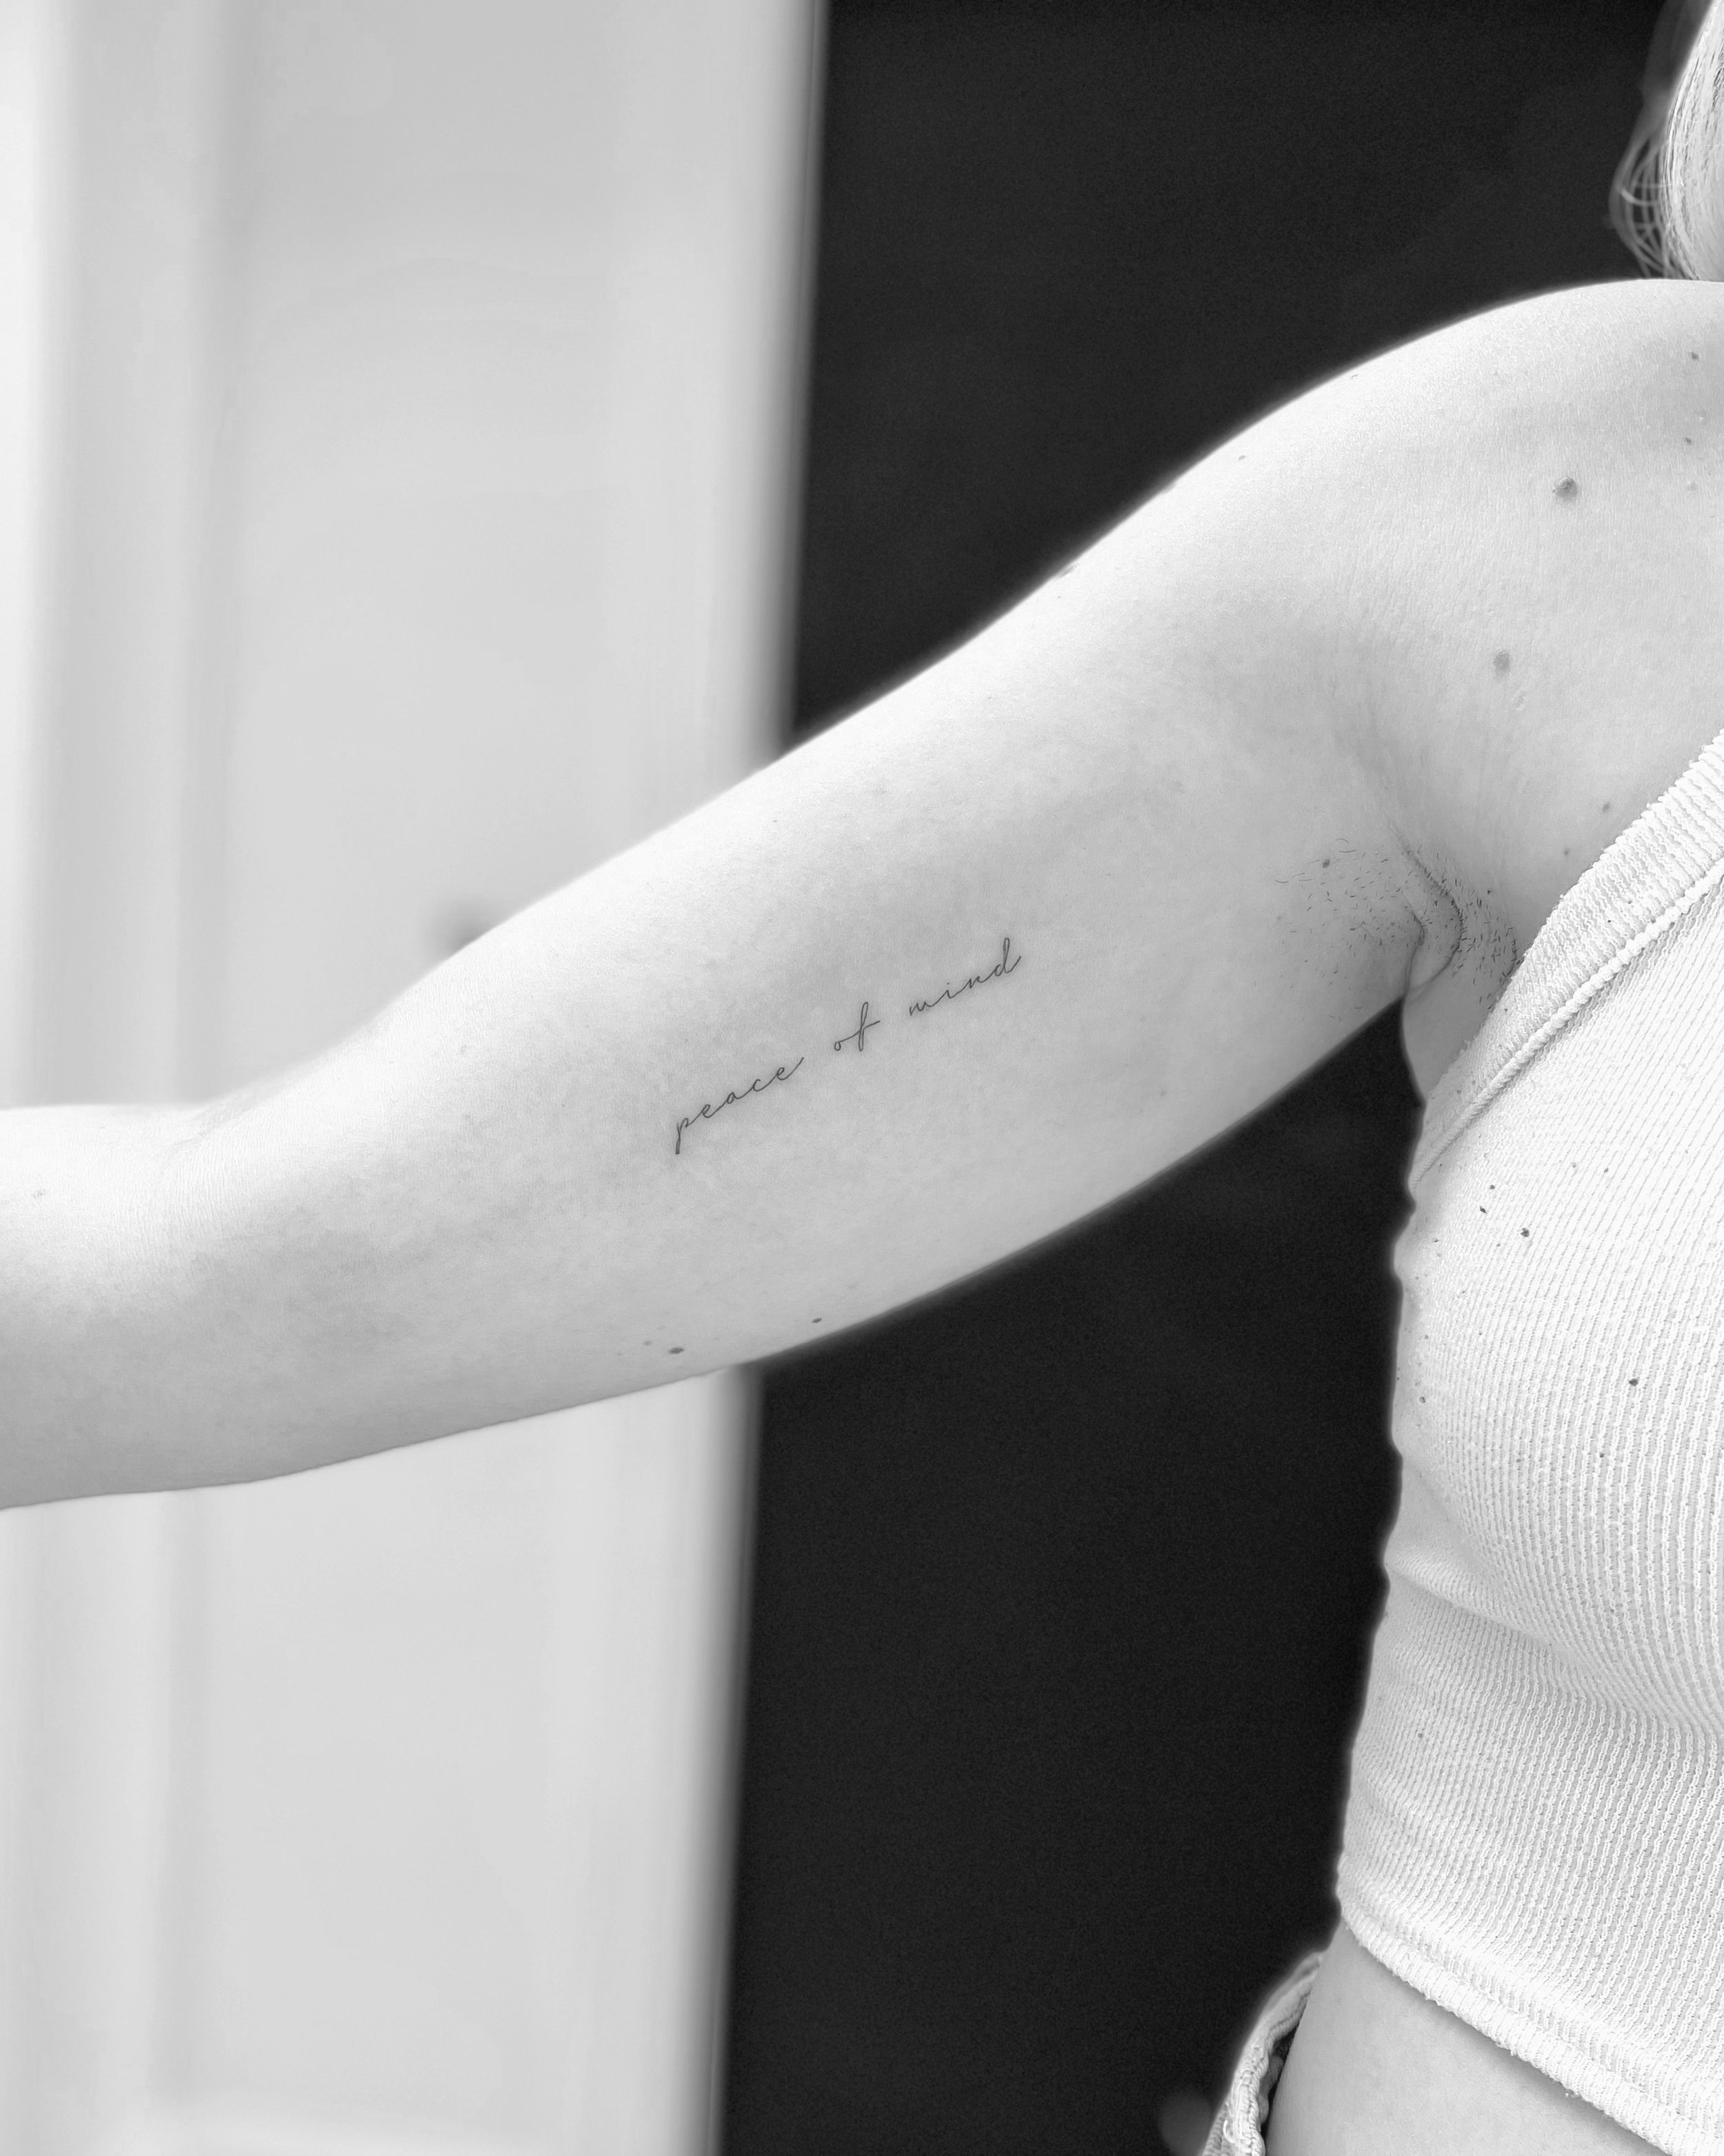 How Wispy Handwriting Made Their Way Into Tattoos